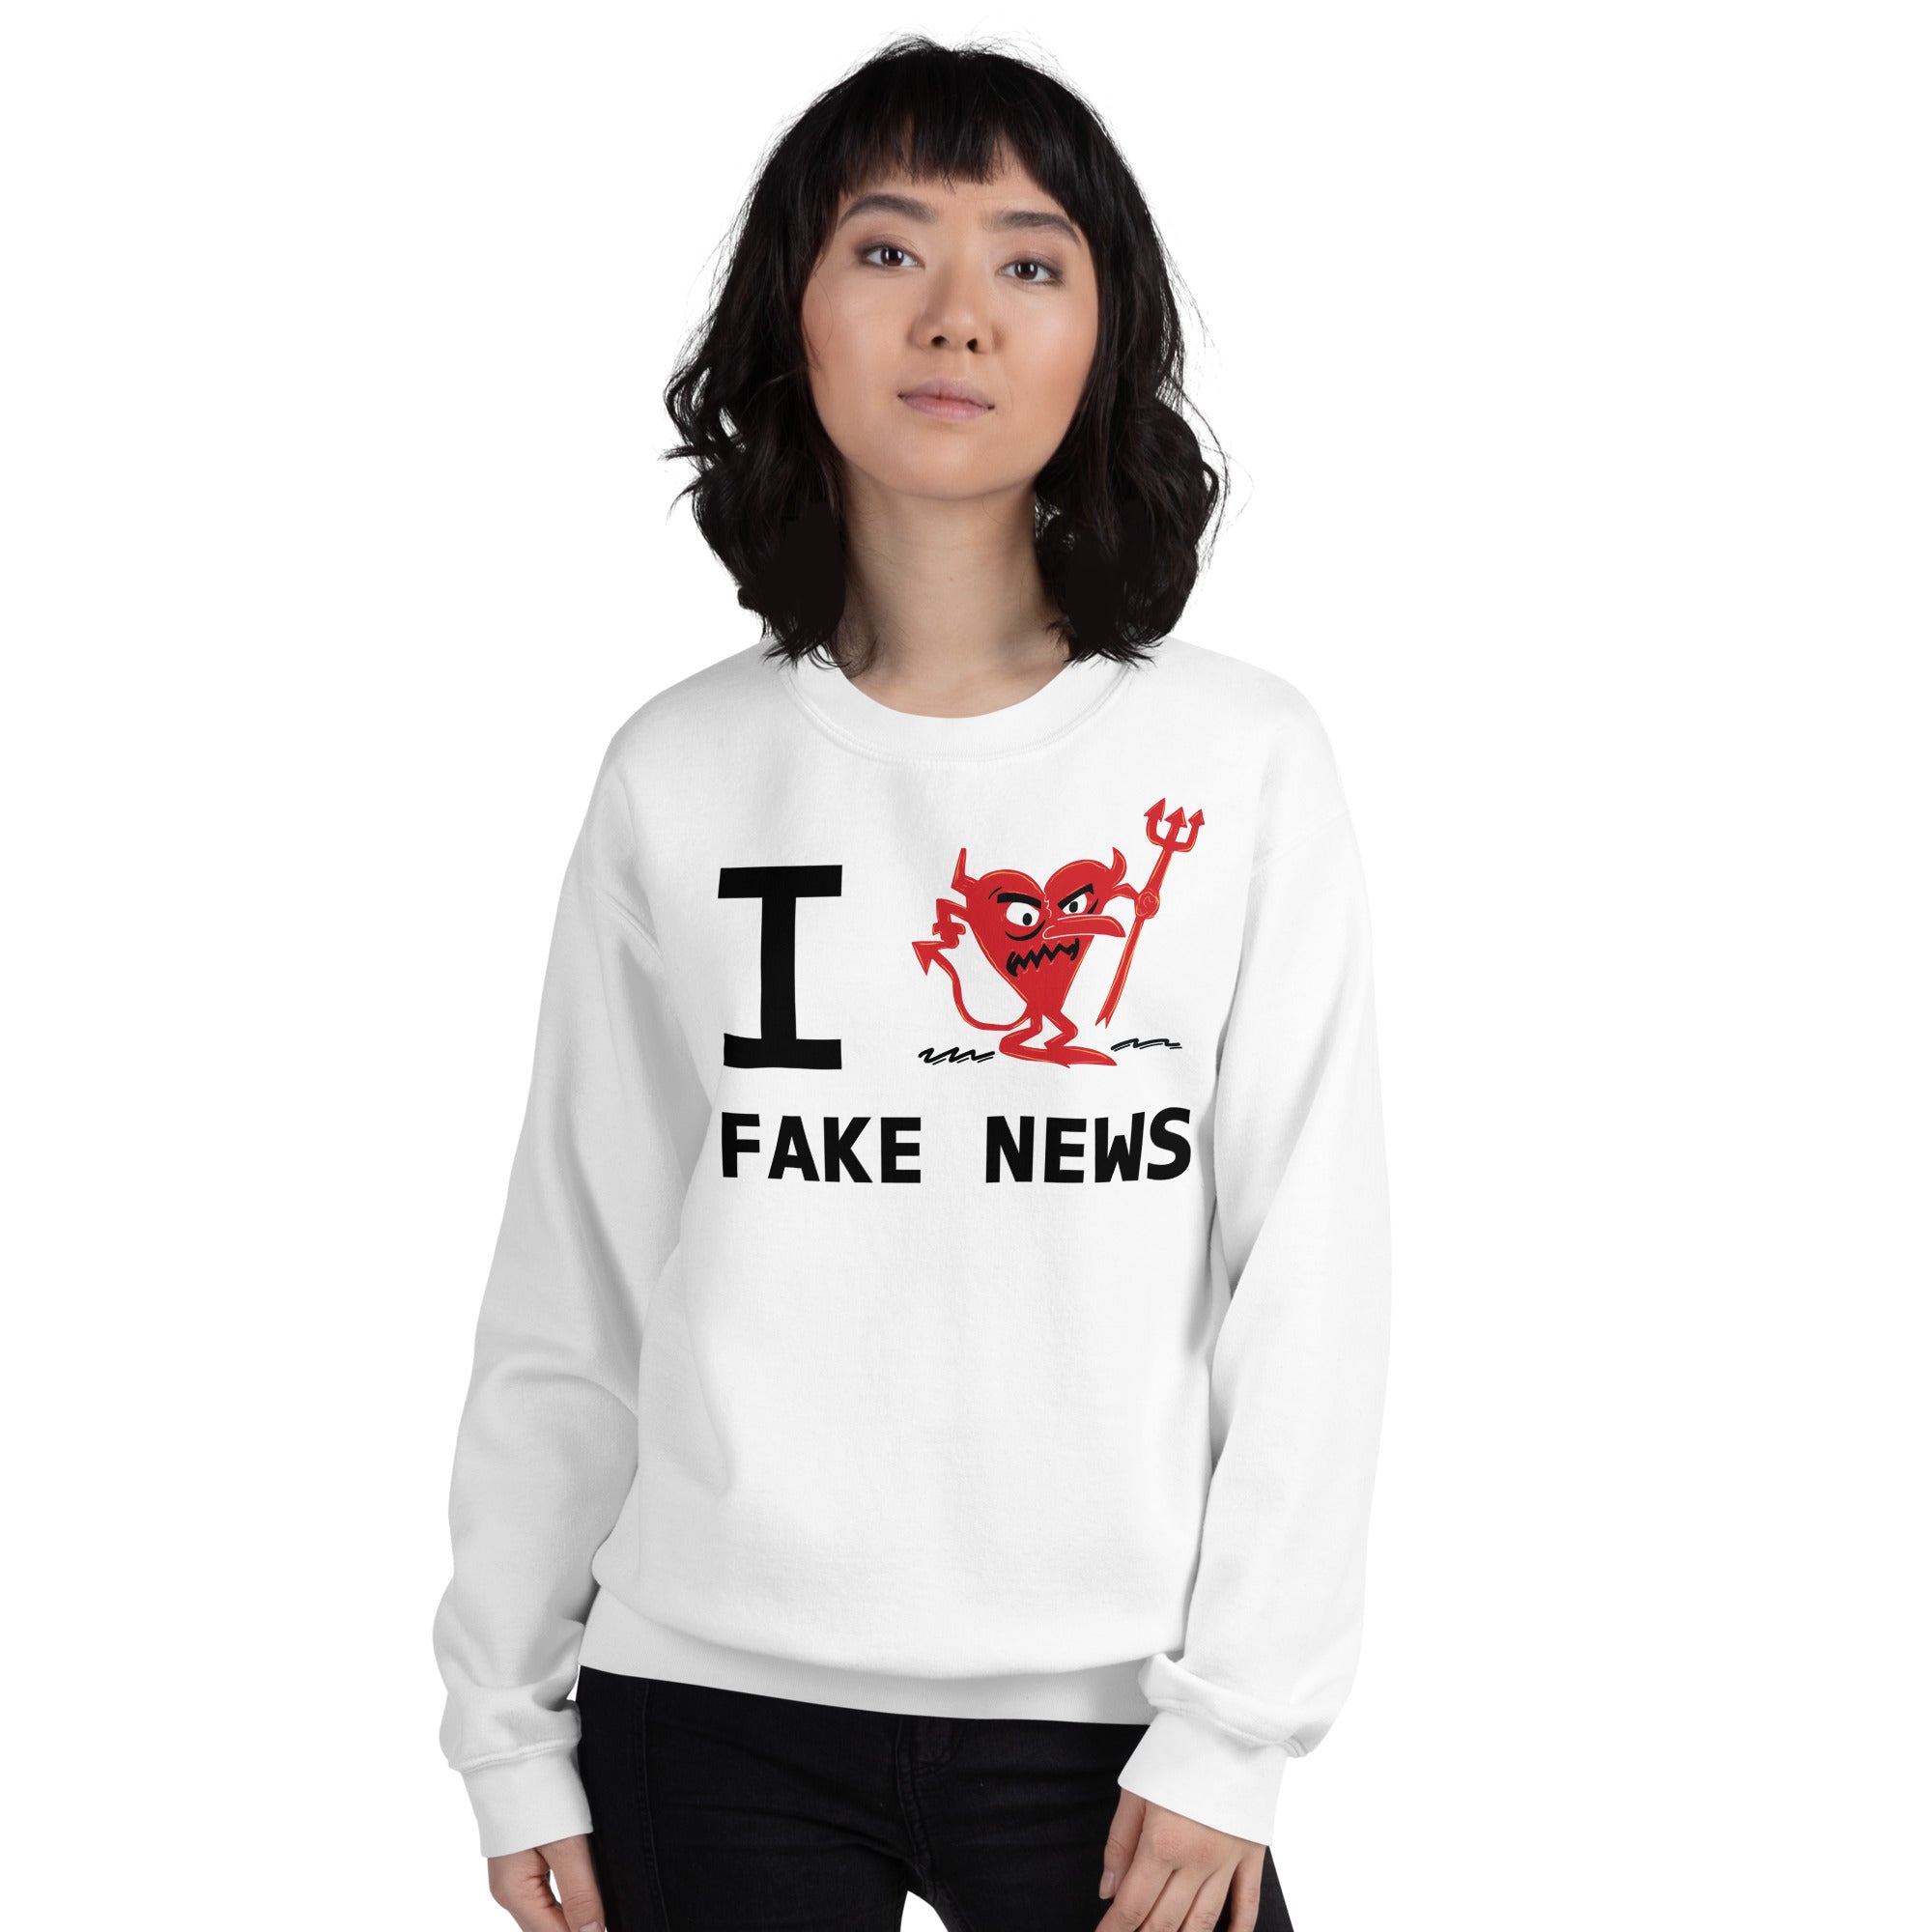 Fake News Unisex Sweatshirt